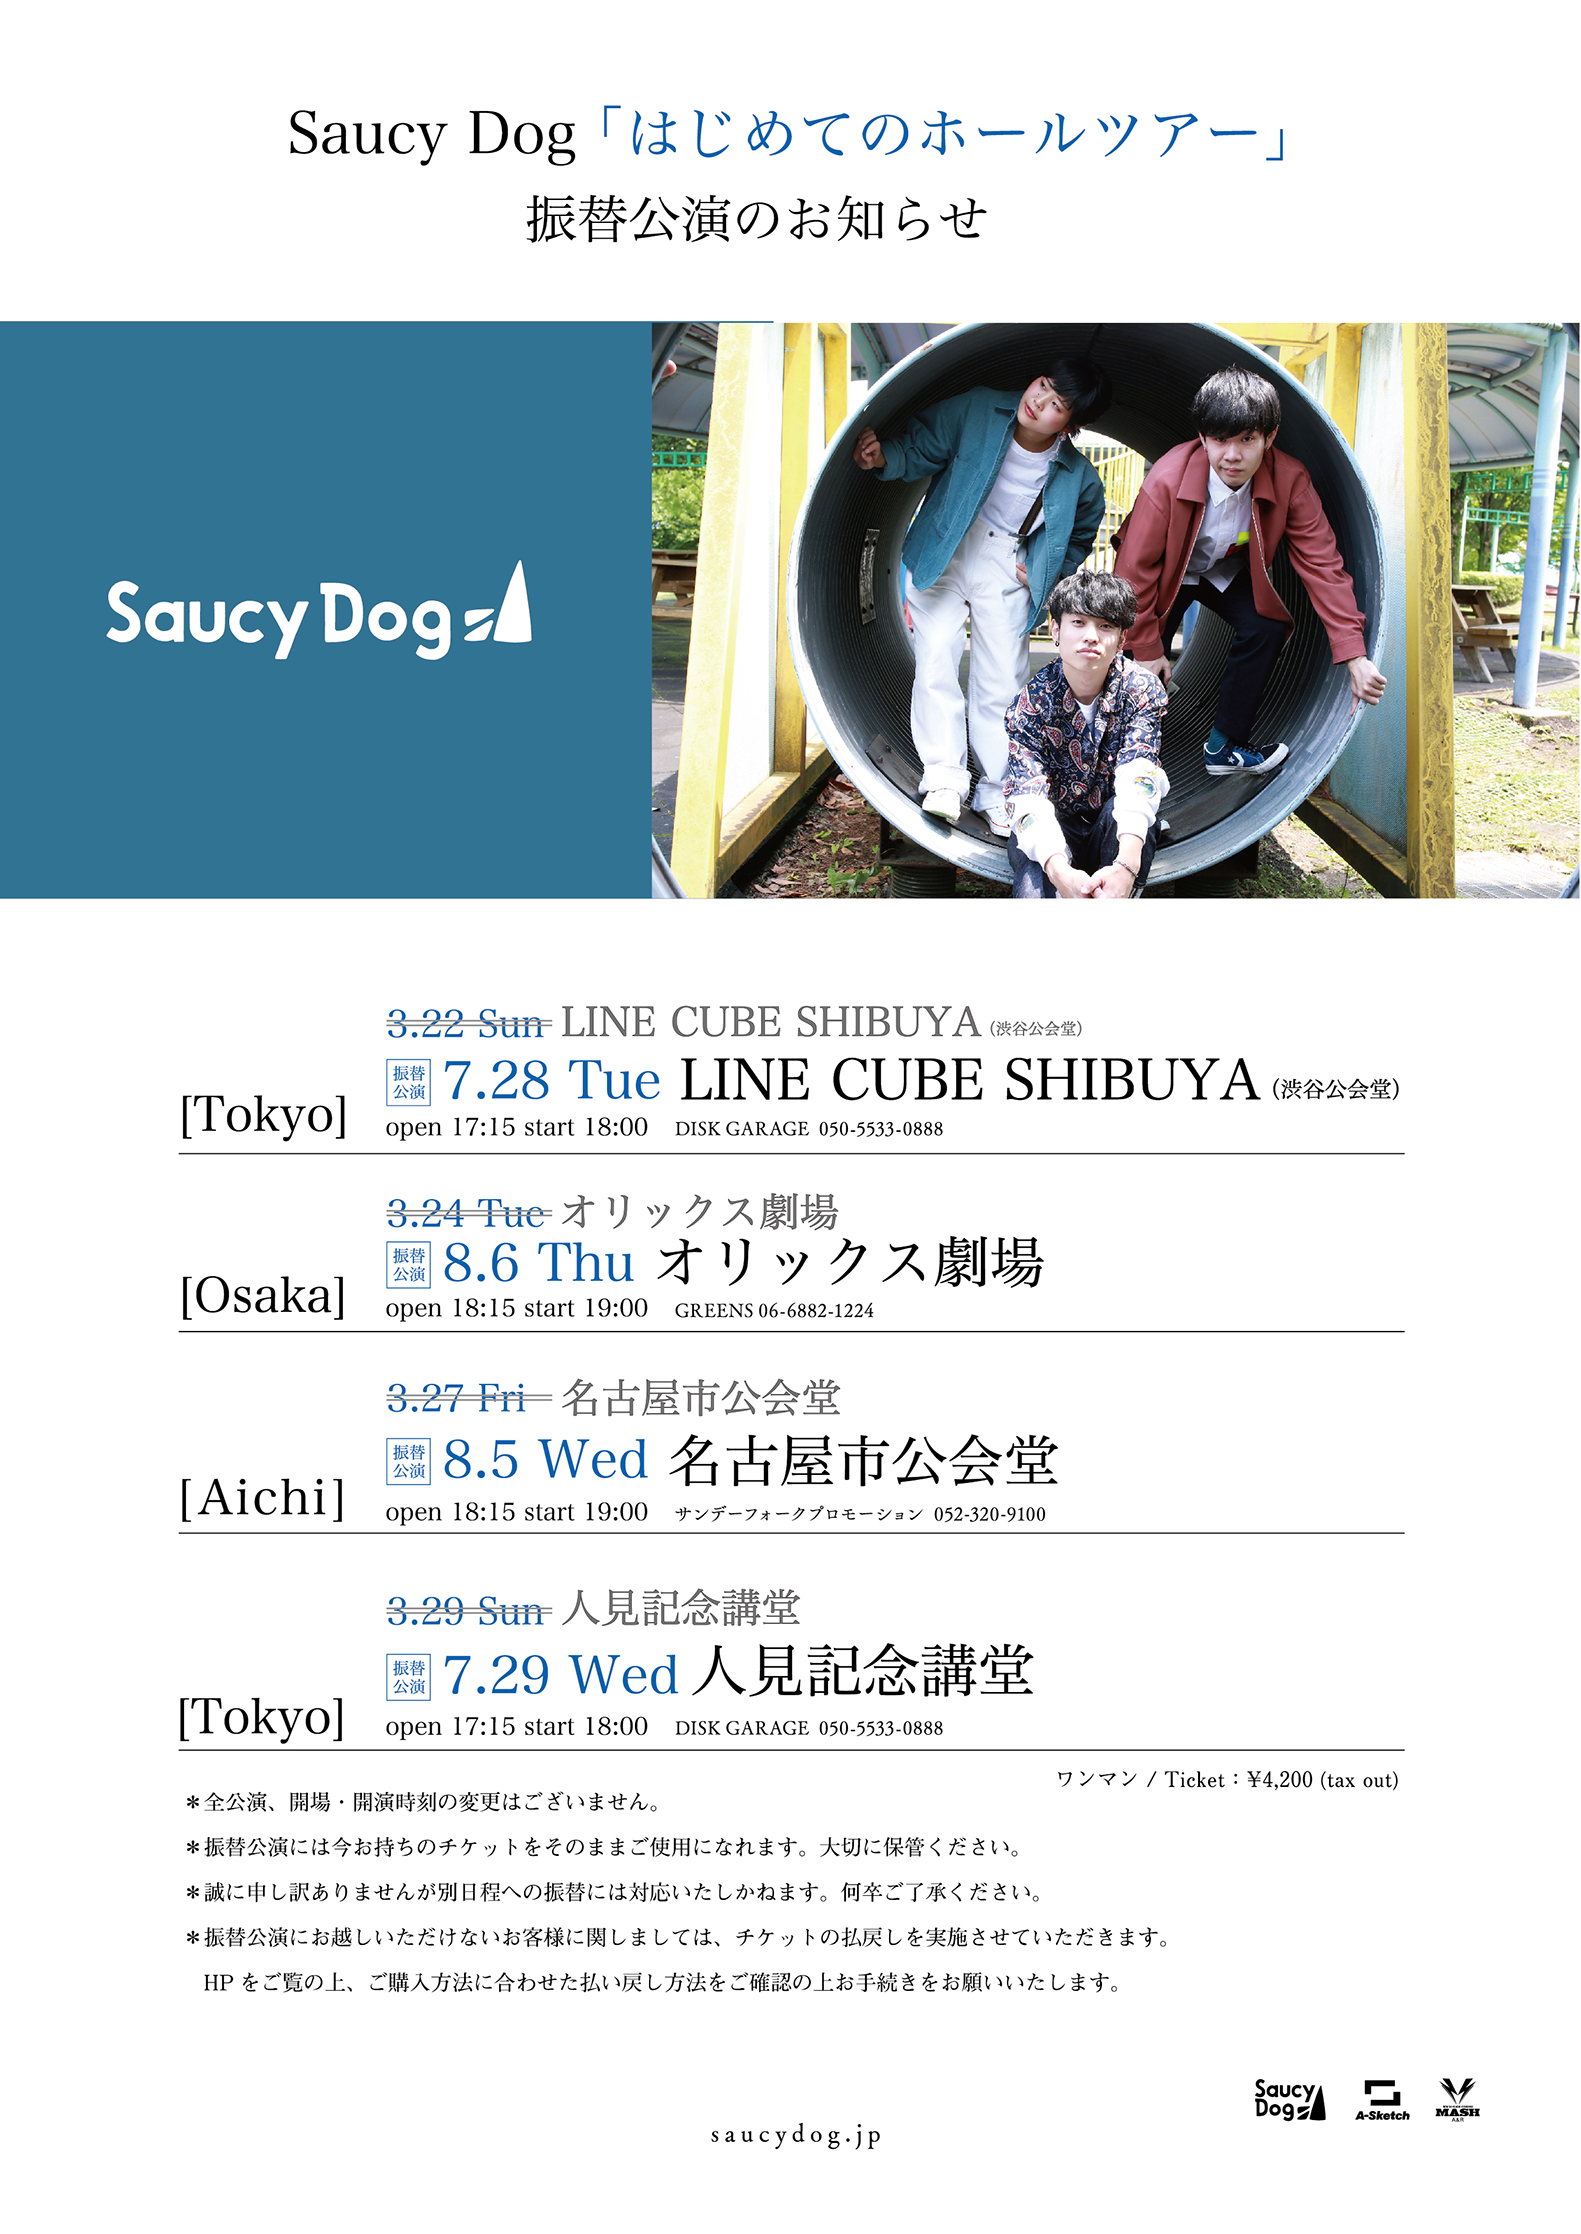 Saucy Dog ワンマンツアー はじめてのホールツアー 公演延期に伴う 振替公演実施と払戻しのお知らせ Saucy Dog Official Site